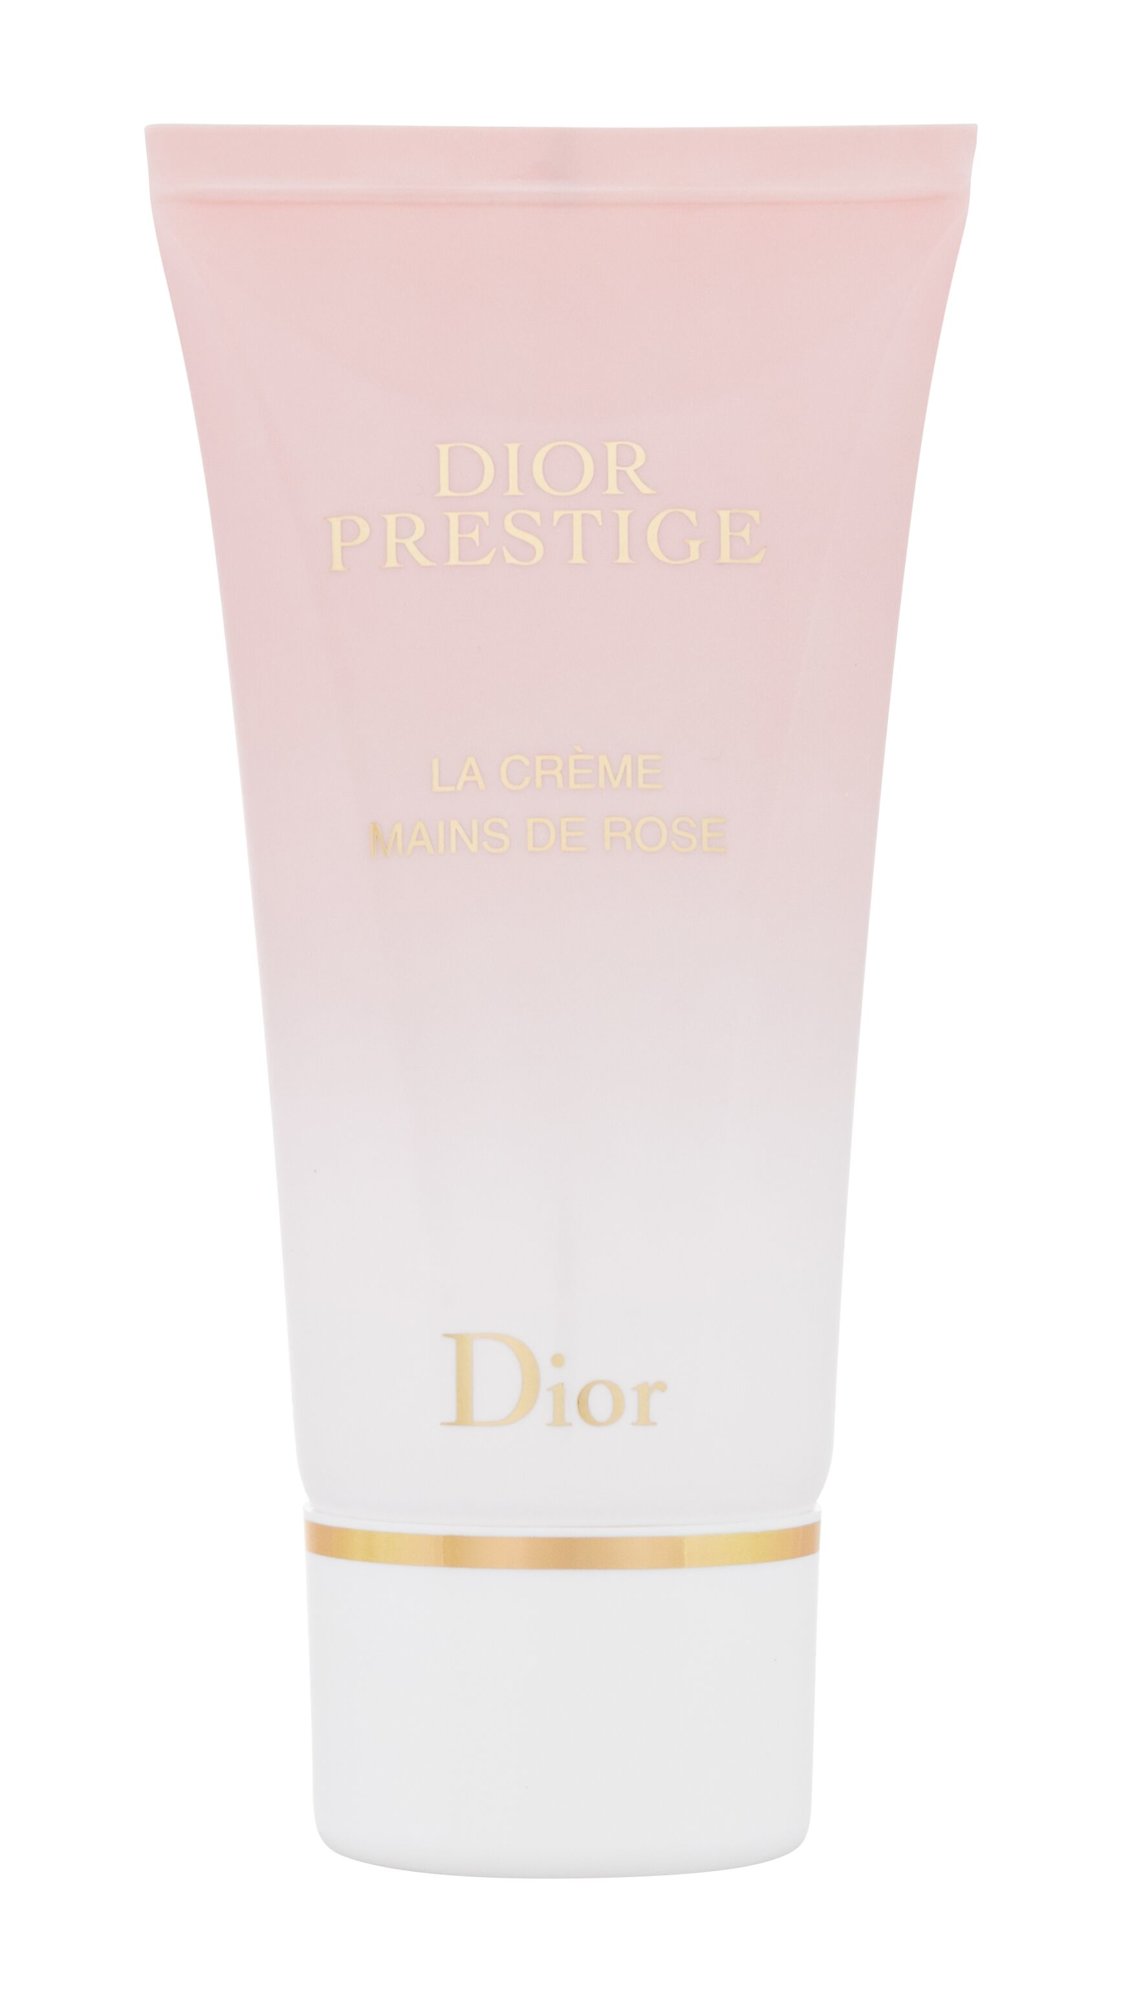 Christian Dior Prestige La Crememe Mains De Rose rankų kremas